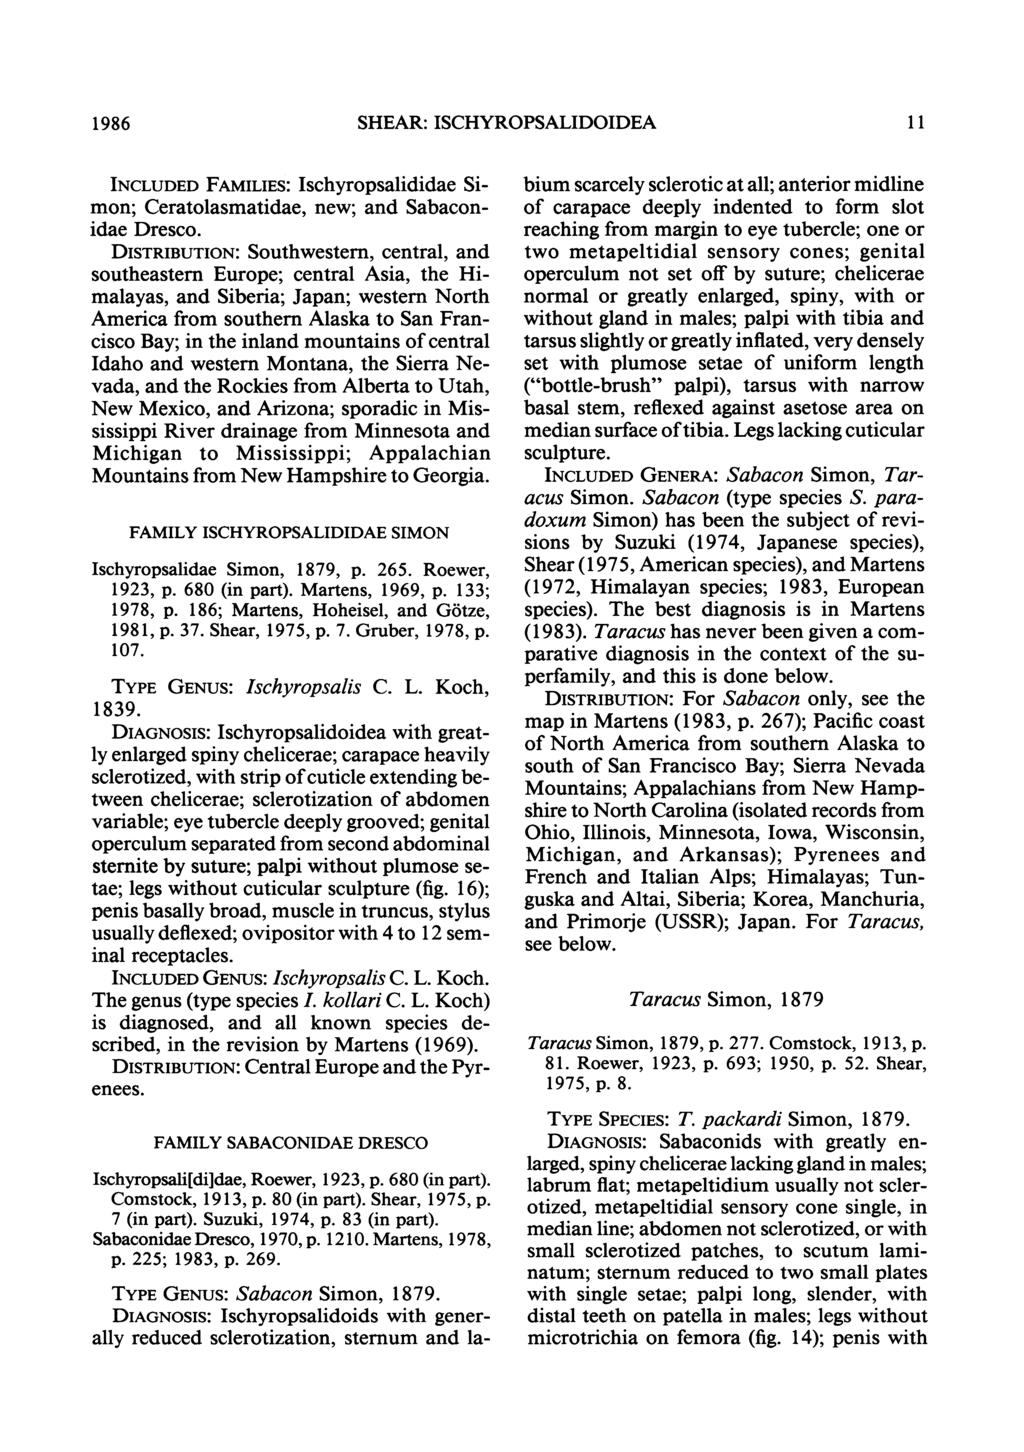 1986 SHEAR: ISCHYROPSALIDOIDEA I1I INCLUDED FAMILIES: Ischyropsalididae Simon; Ceratolasmatidae, new; and Sabaconidae Dresco.